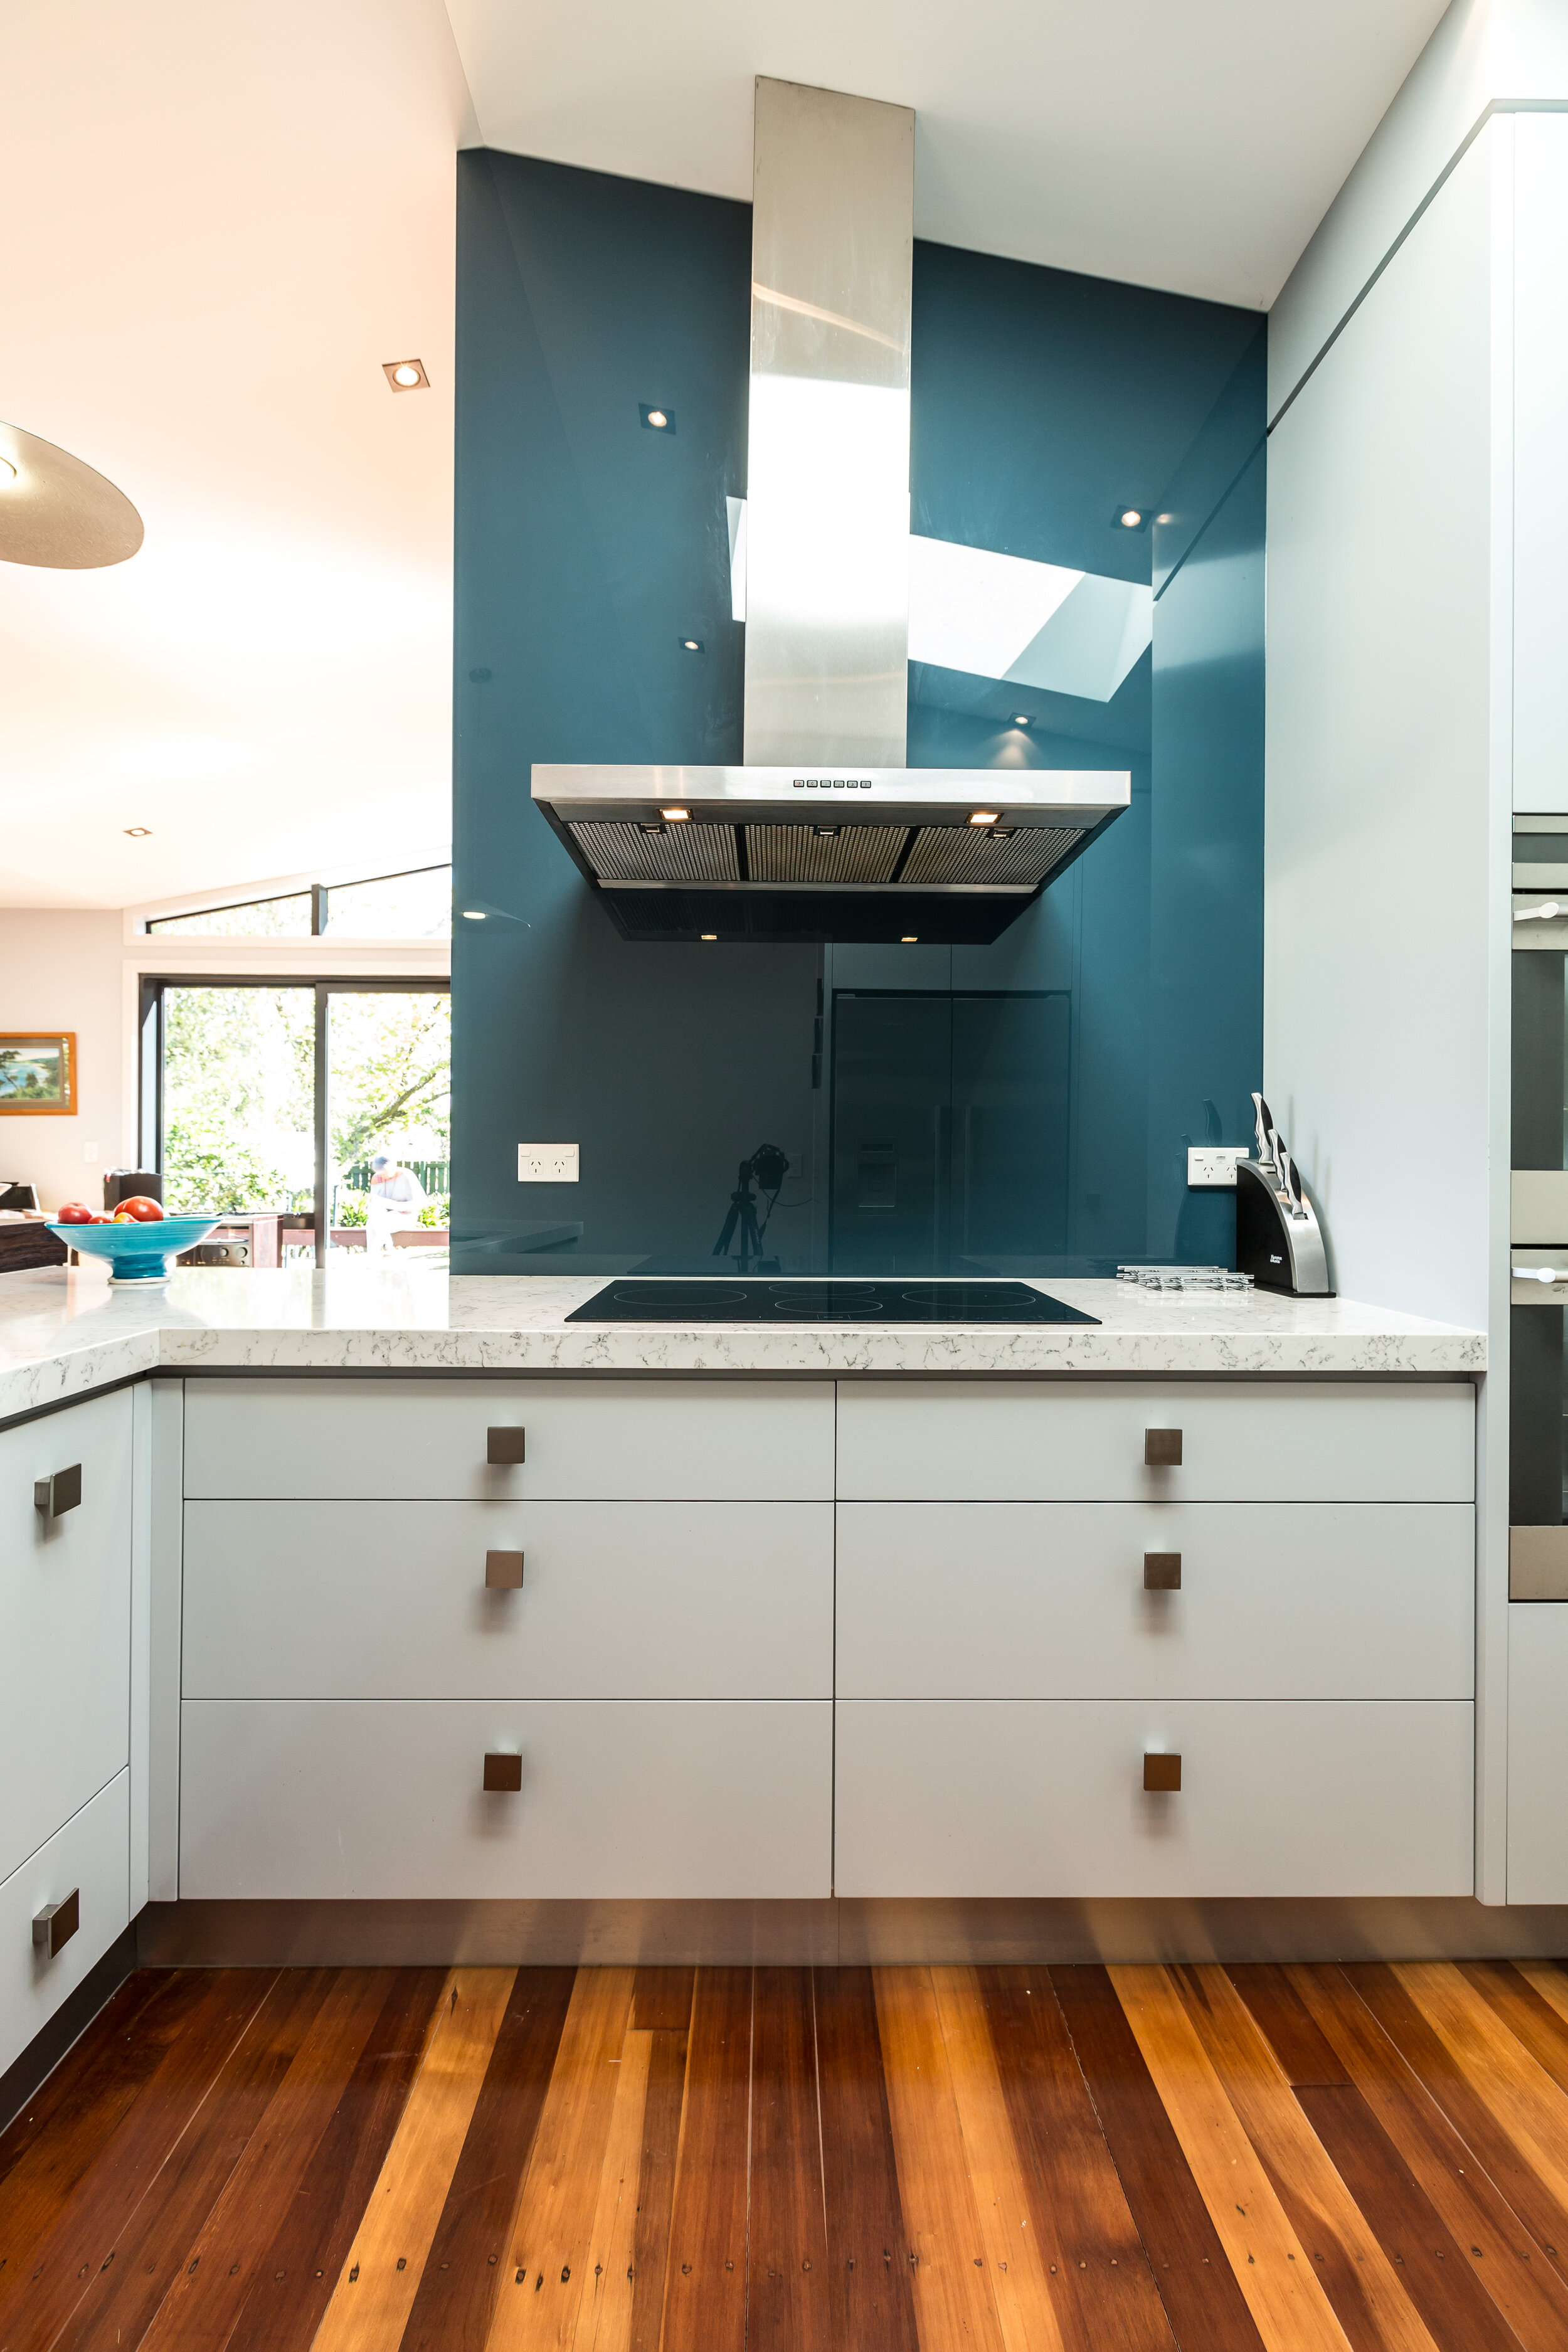 Full height angled glass splashback in teal blue in white kitchen